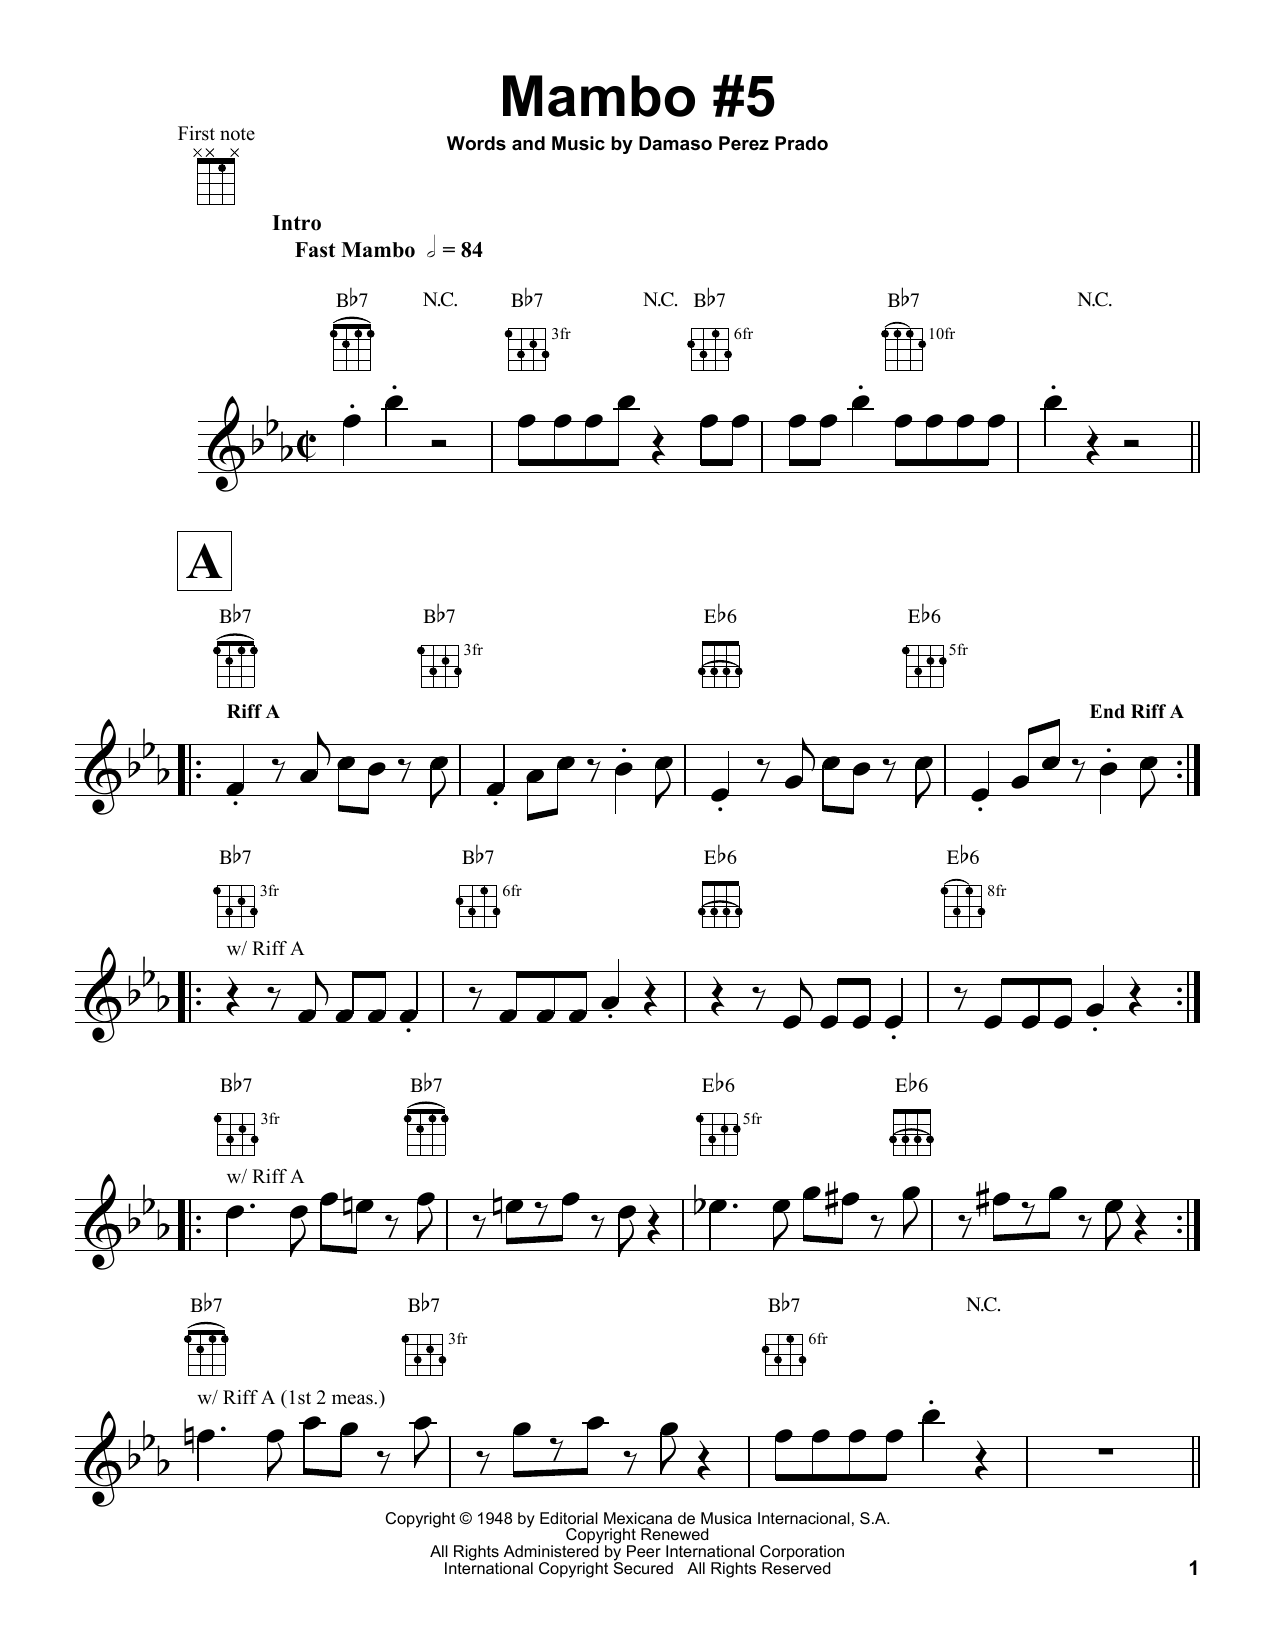 Damaso Perez Prado Mambo #5 Sheet Music Notes & Chords for Melody Line, Lyrics & Chords - Download or Print PDF